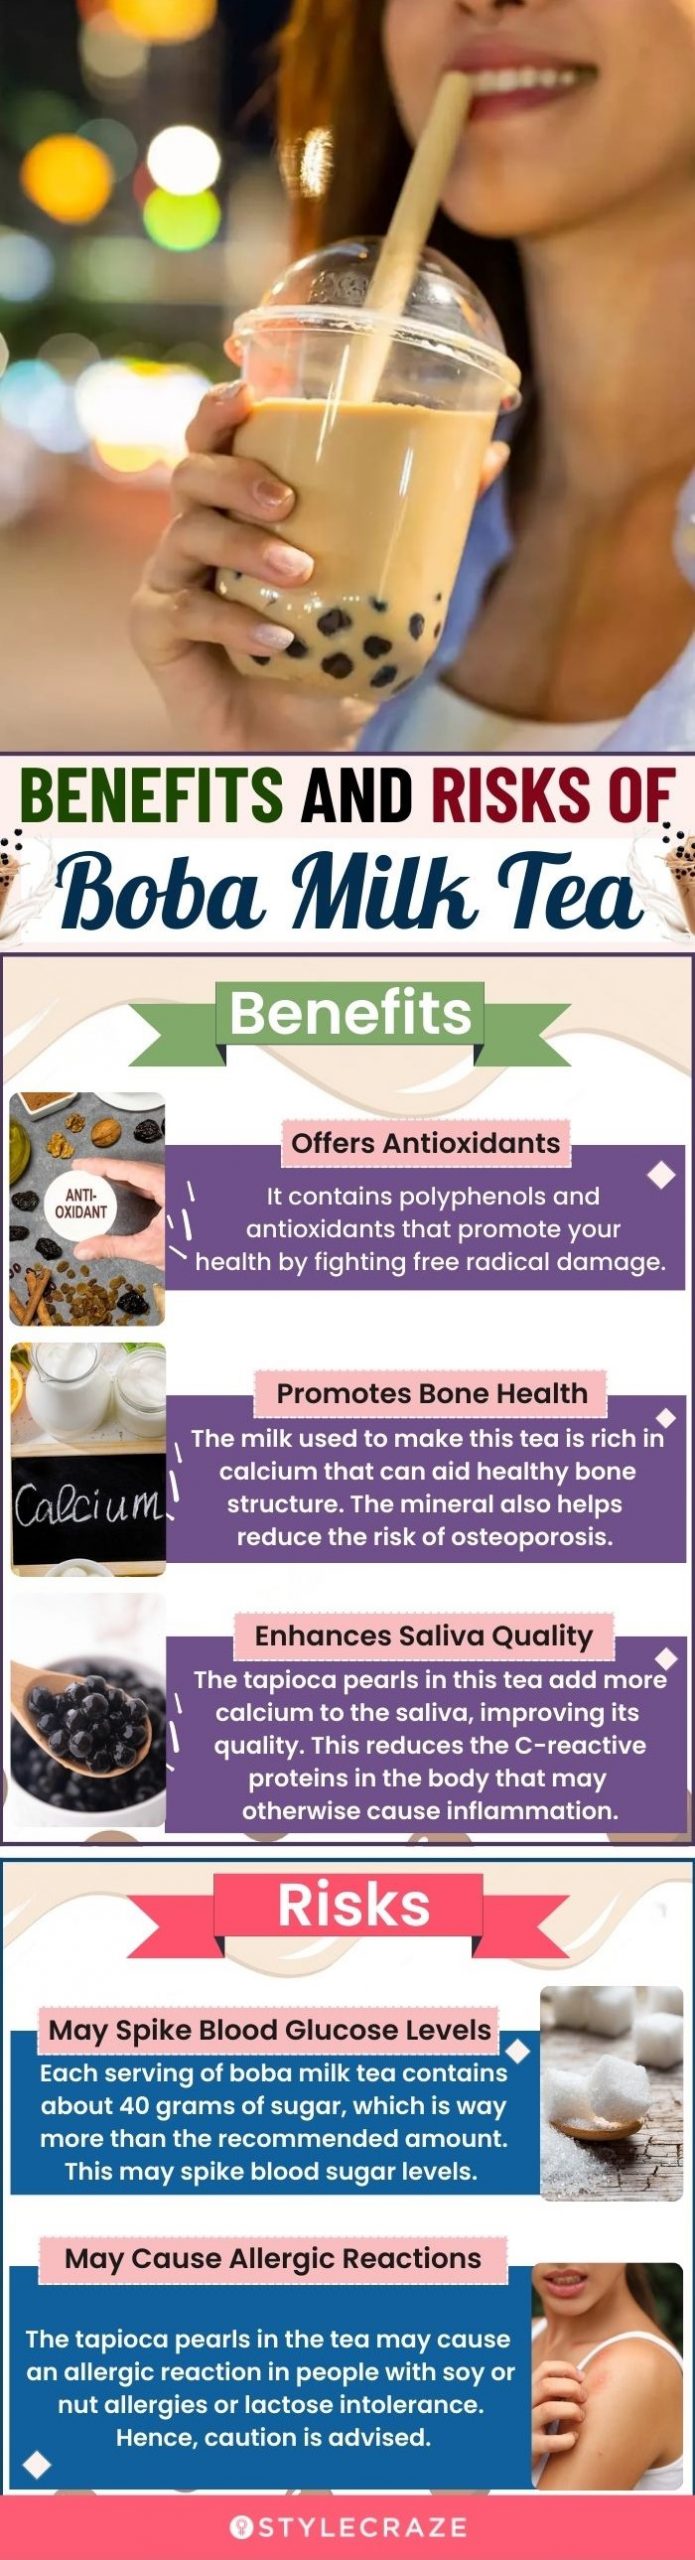 benefits and risks of boba milk tea (infographic)